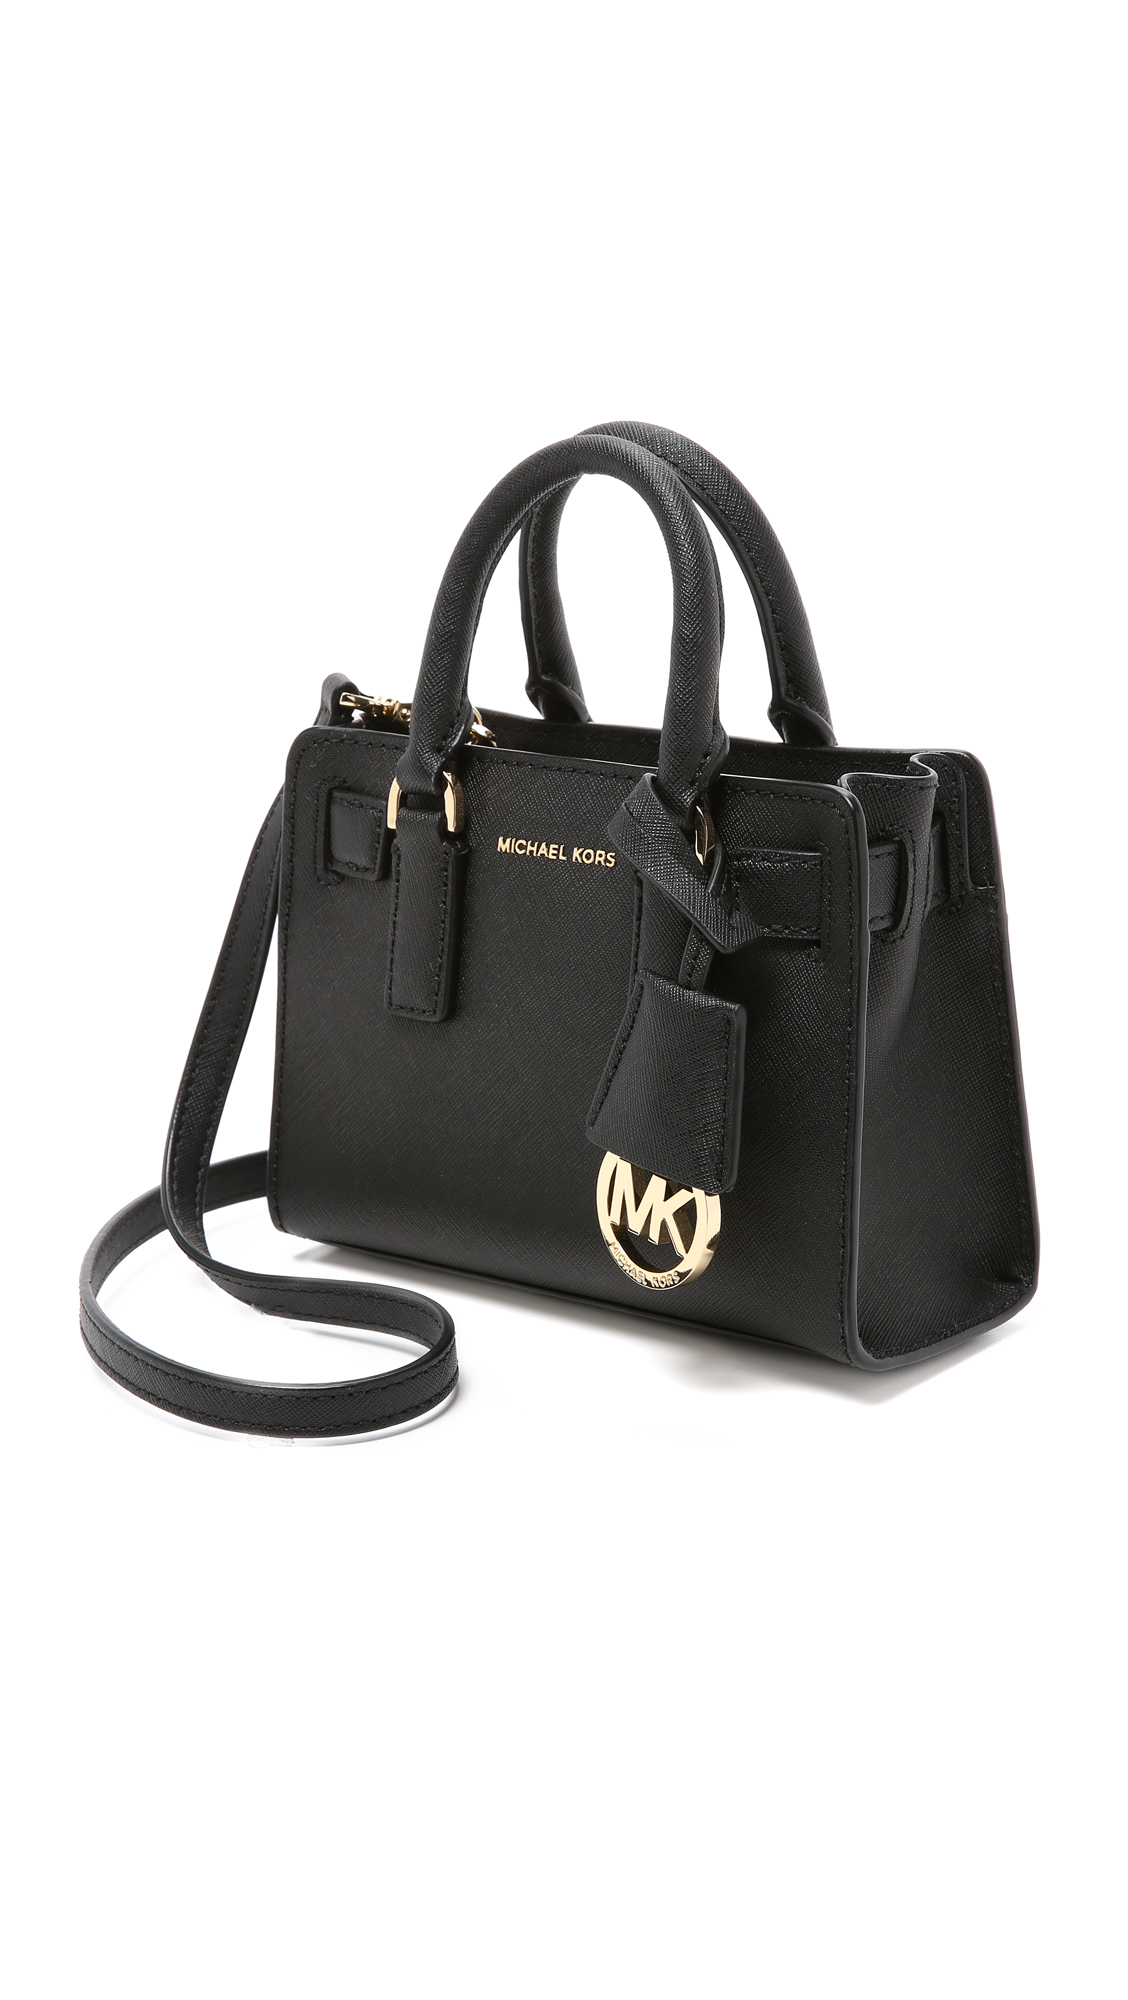 Michael Kors Black Handbag Clearance Store, 49% OFF | bitternesafloat.co.uk